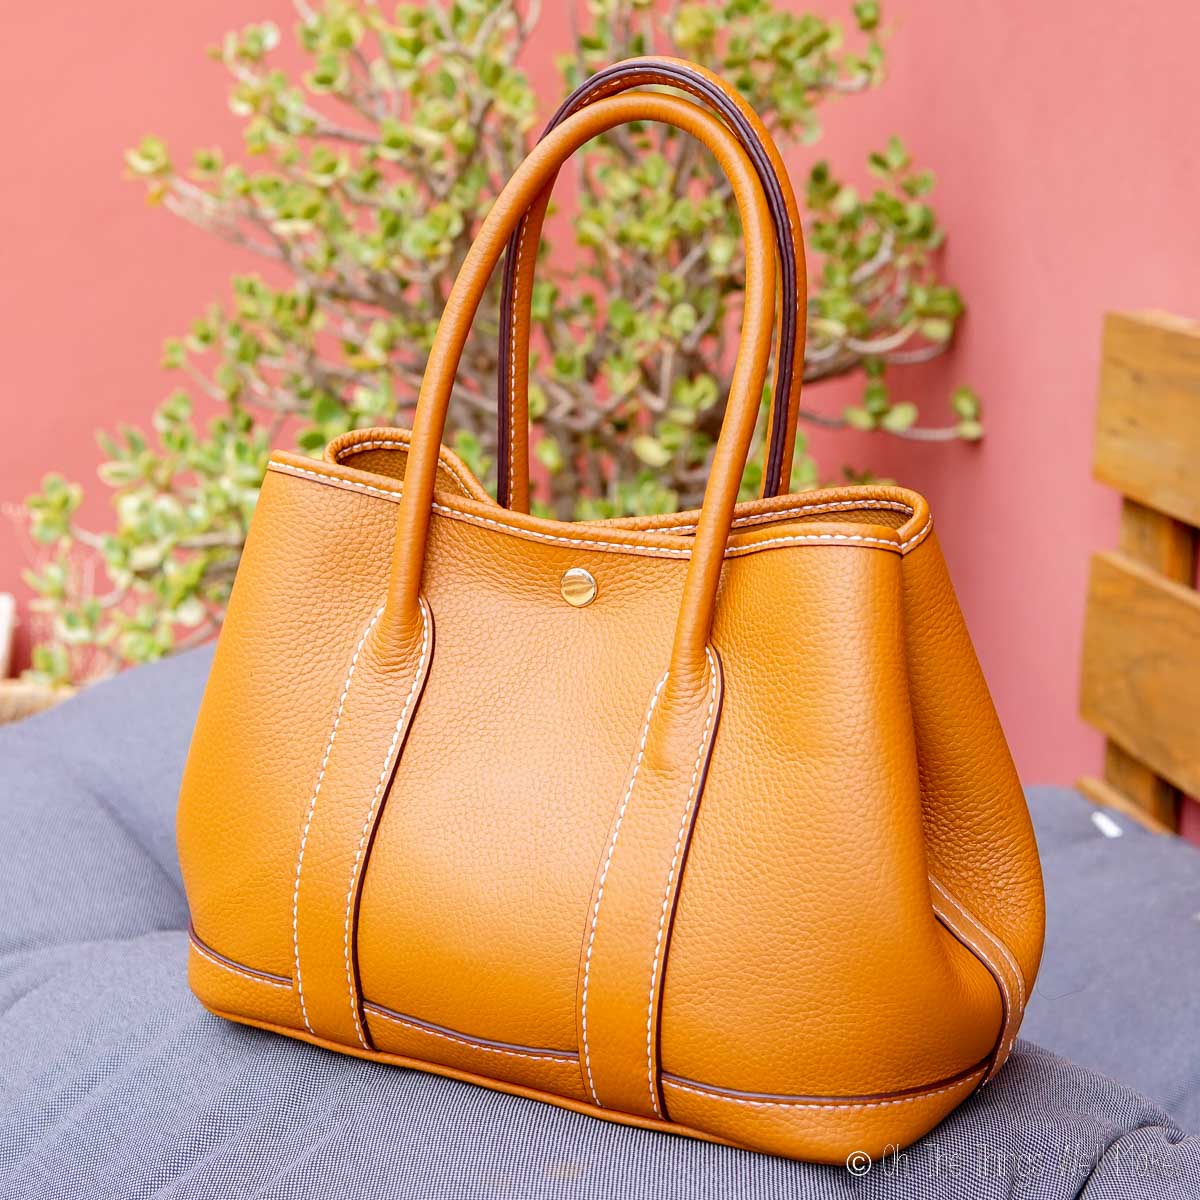 A caramel colored leather purse